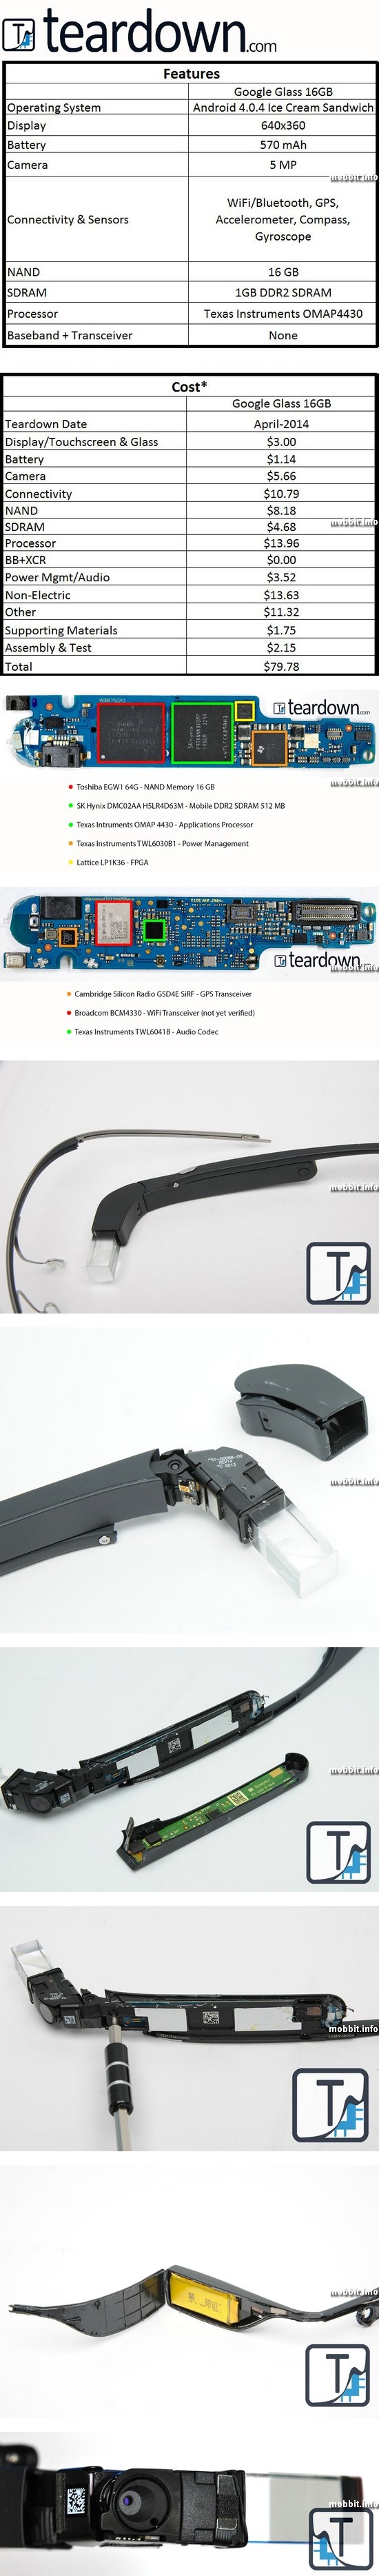       Google Glass?